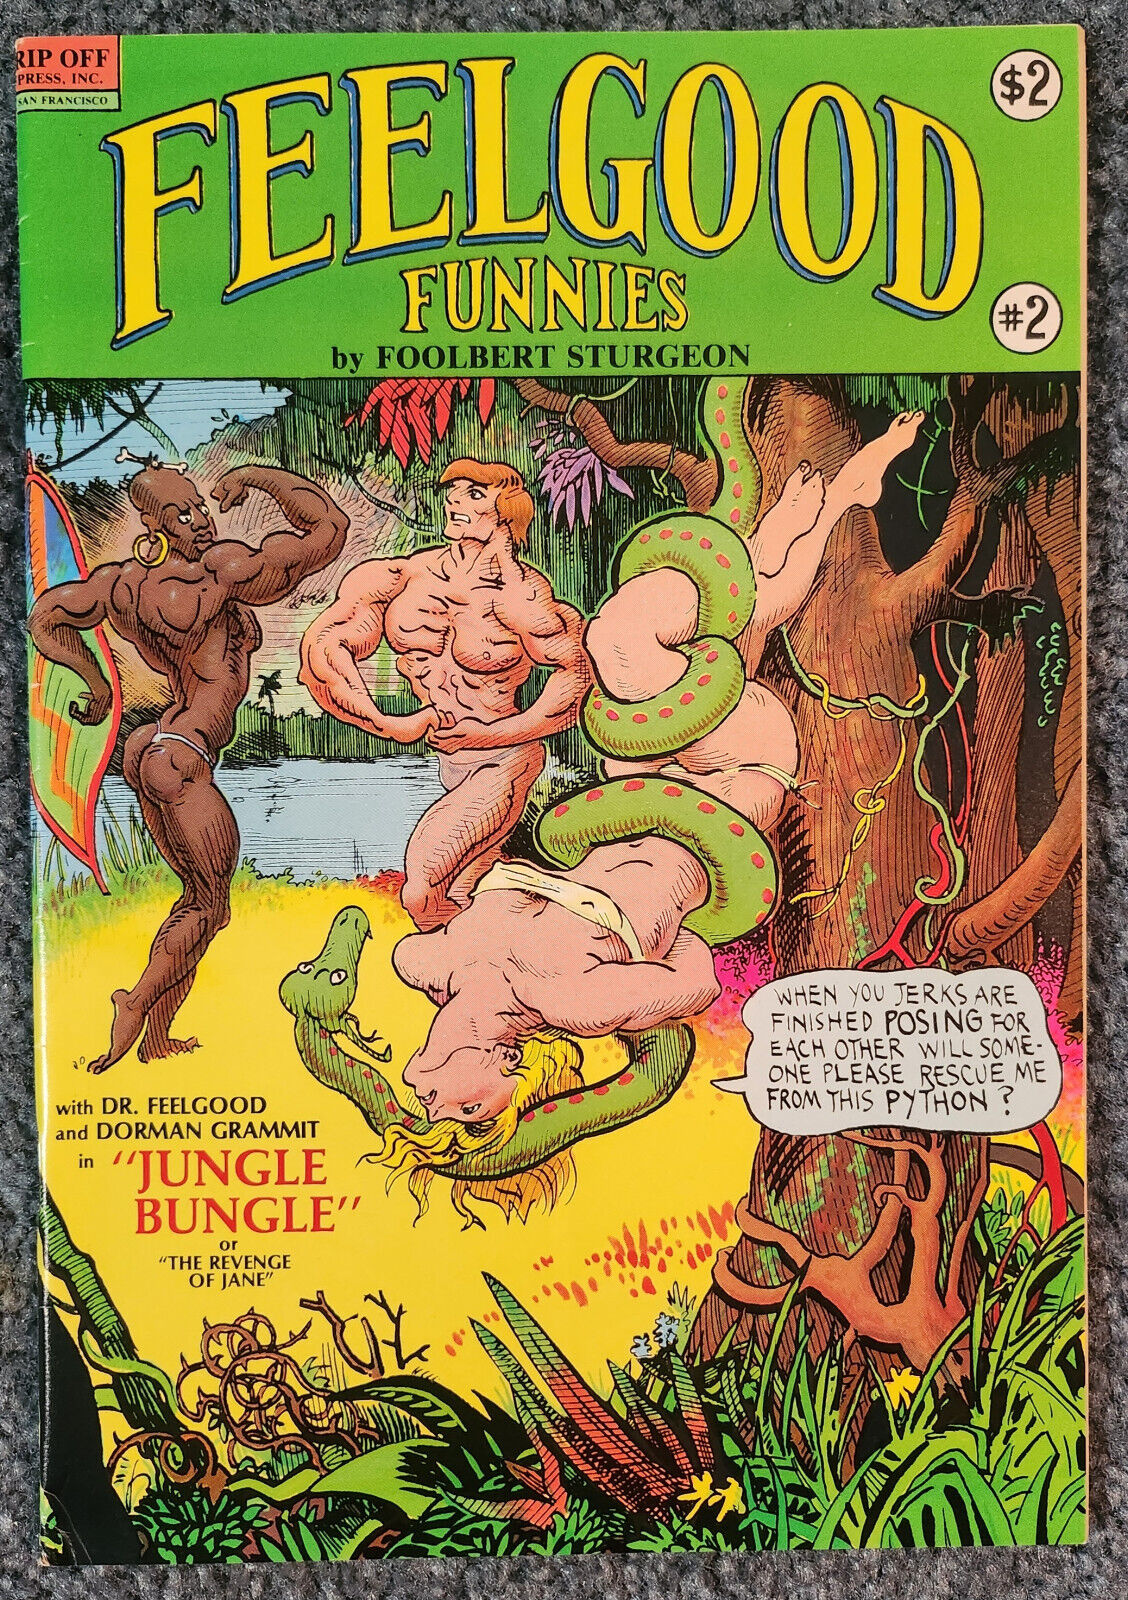 Feelgood Funnies #2 1984 Foolbert Sturgeon Rip Off Press Underground Comic - NM-